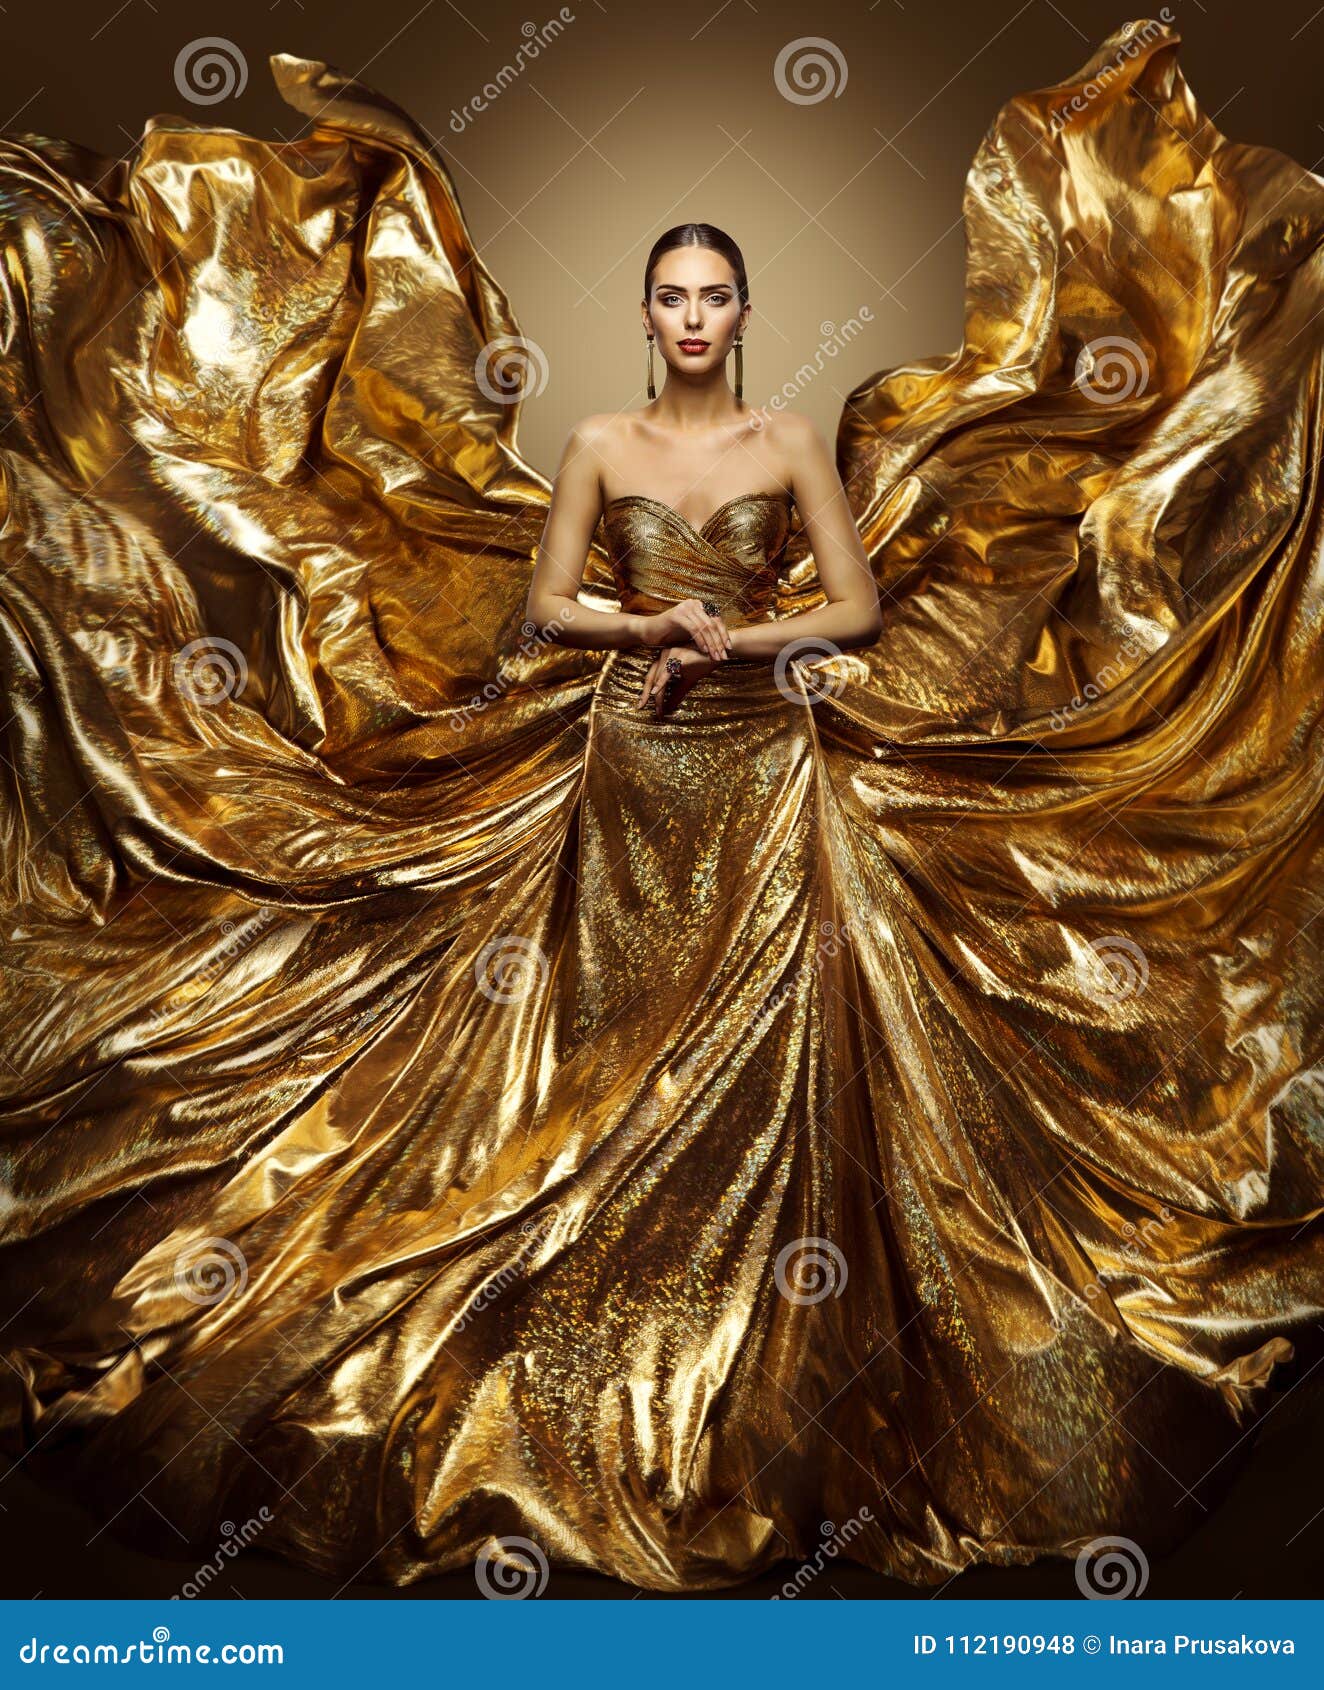 udobnost, izazov - Page 16 Gold-woman-flying-dress-fashion-model-waving-golden-gown-fluttering-fabric-fly-like-wings-art-beauty-portrait-112190948